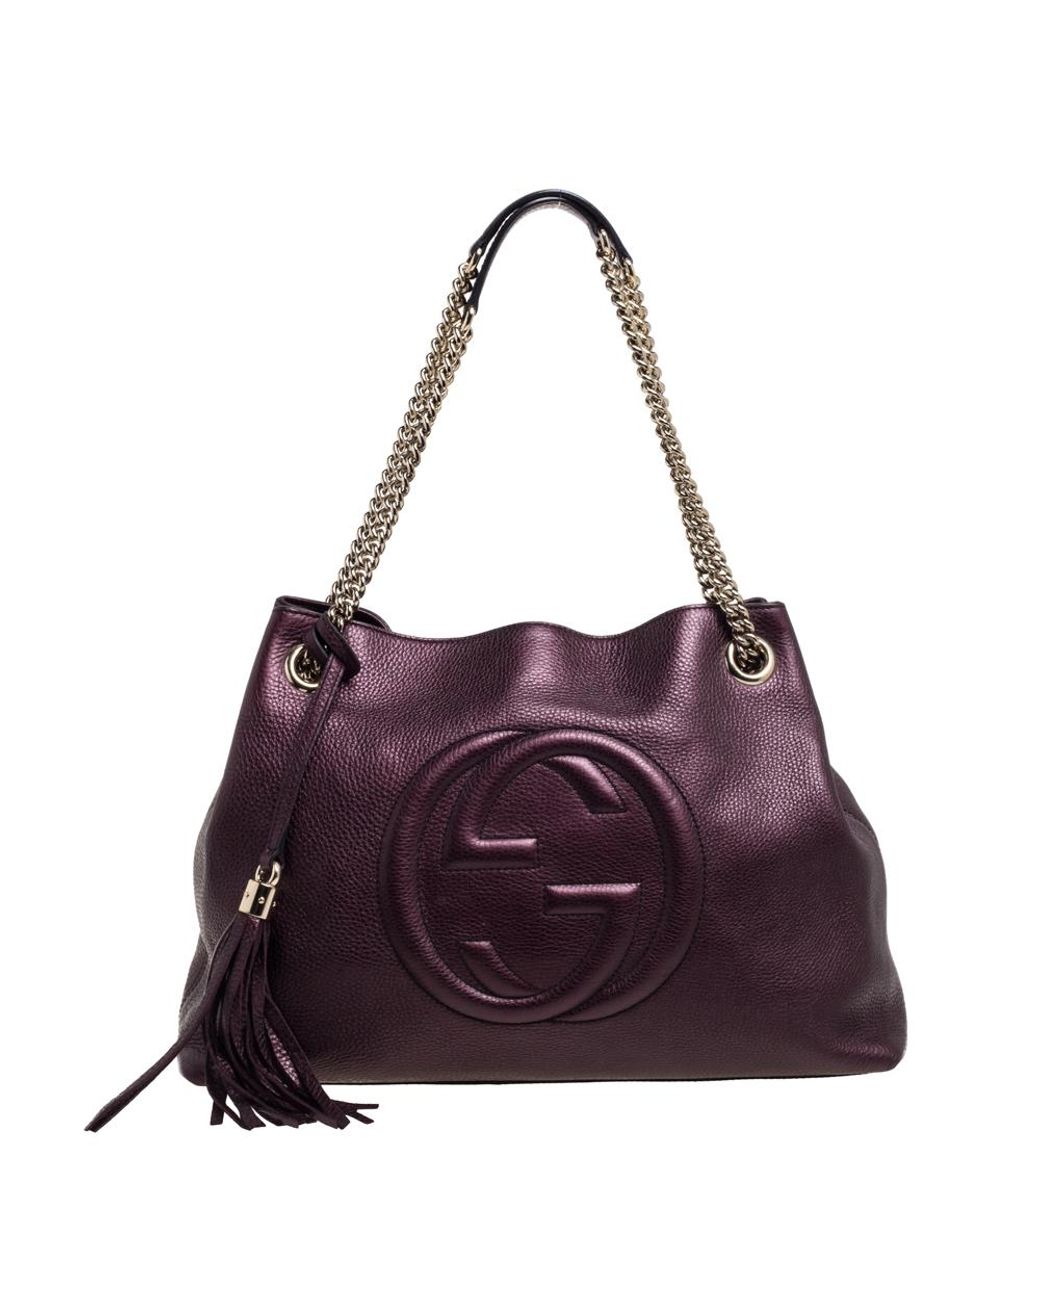 Gucci Metallic Purple Leather Medium Soho Shoulder Bag - Lyst